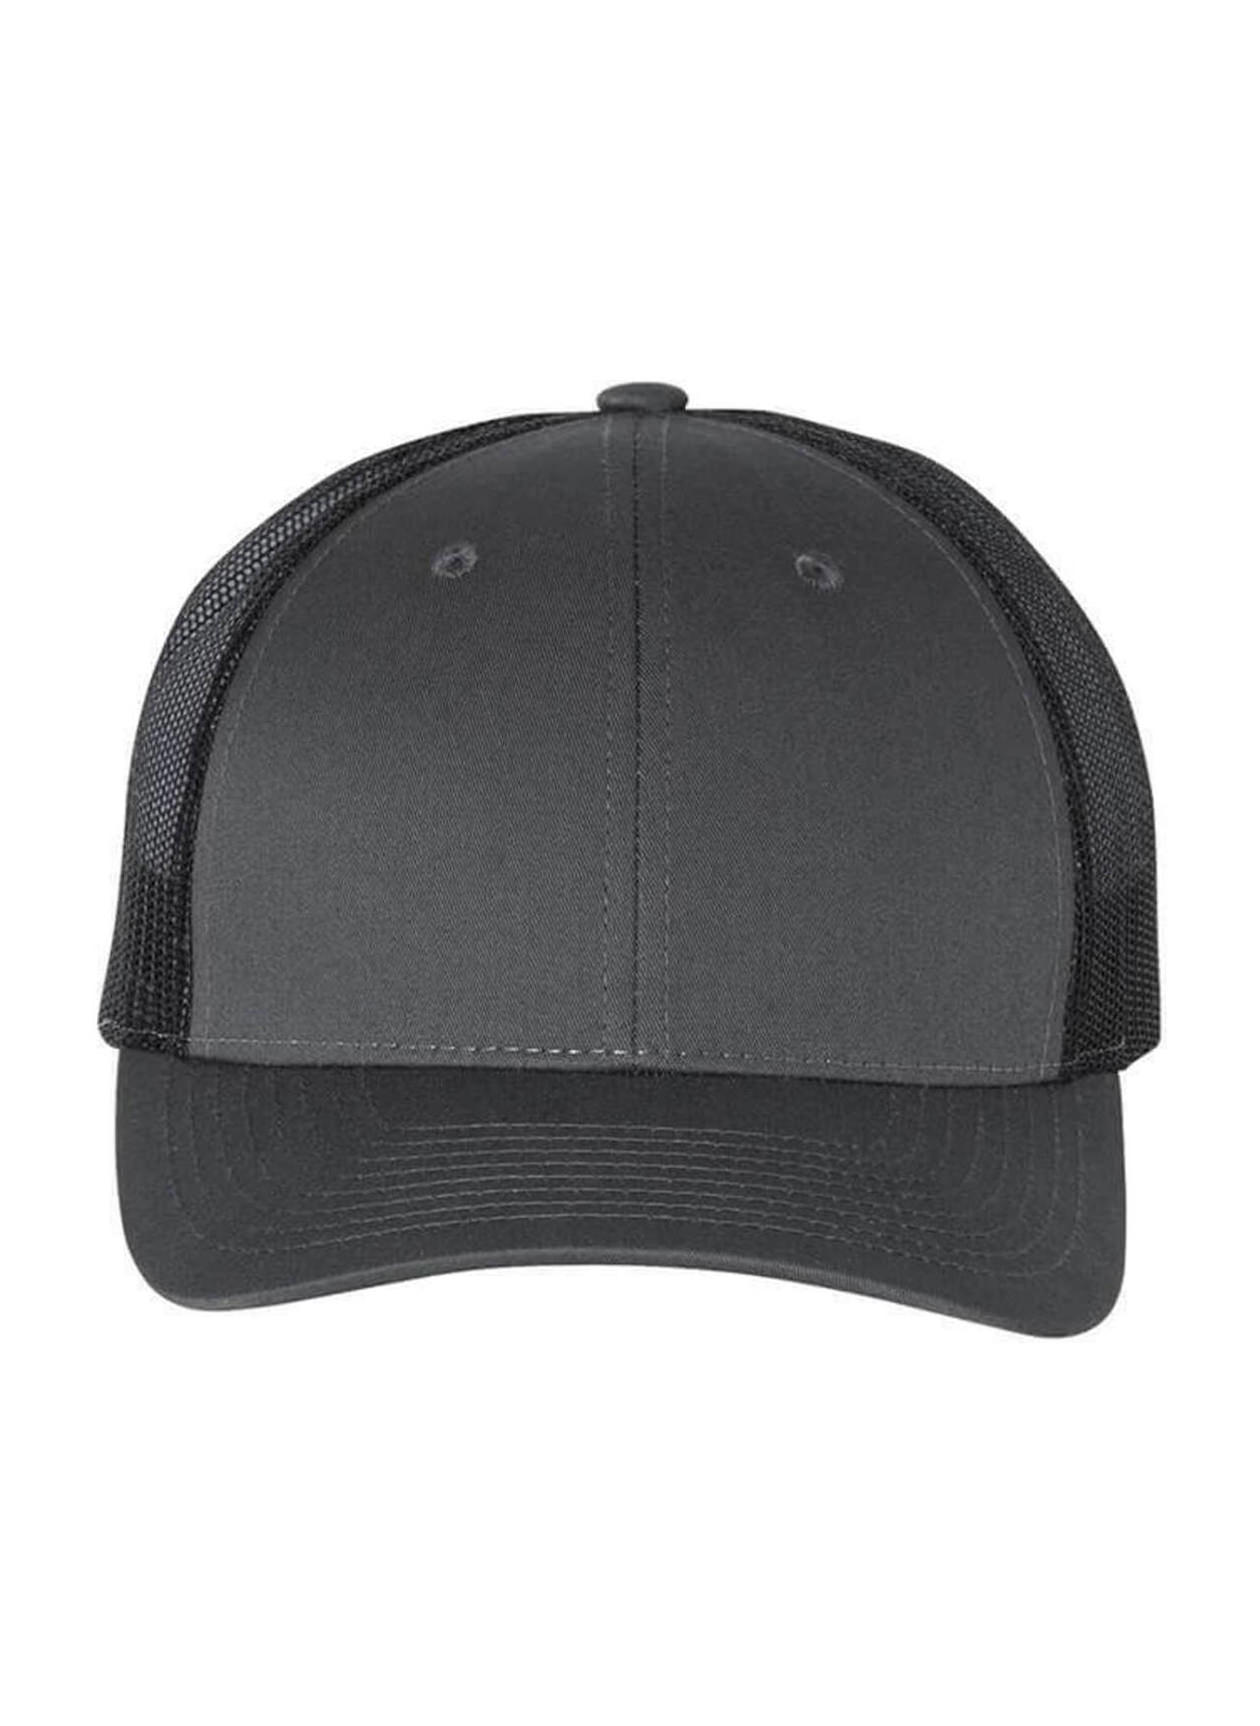 Richardson Charcoal / Black Low Pro Trucker Hat